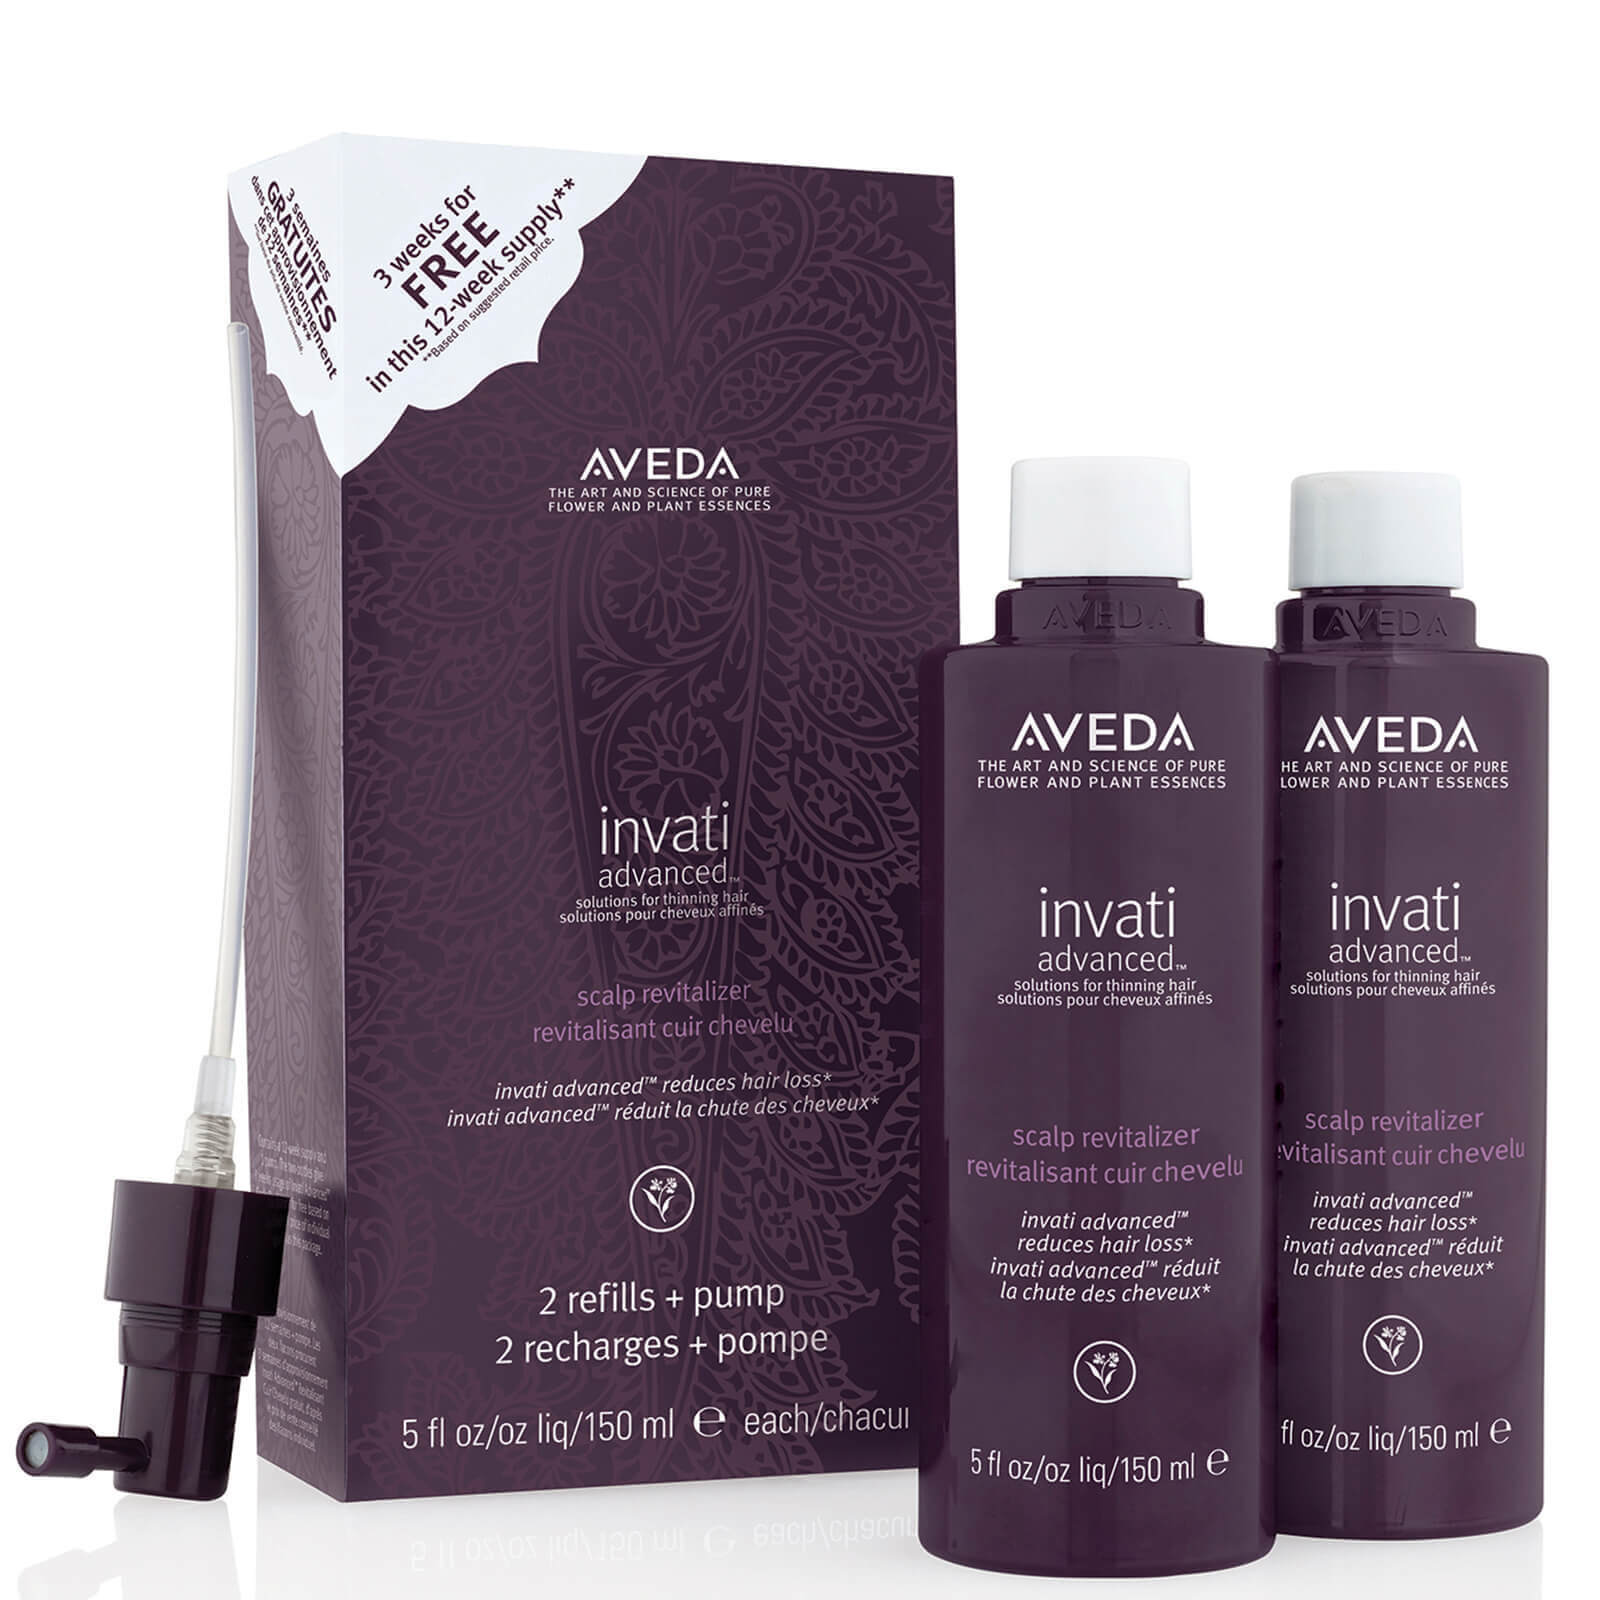 Photos - Hair Product Aveda Invati Advanced Scalp Revitalizer Duo Pack 2 x 150ml AMFX010000 